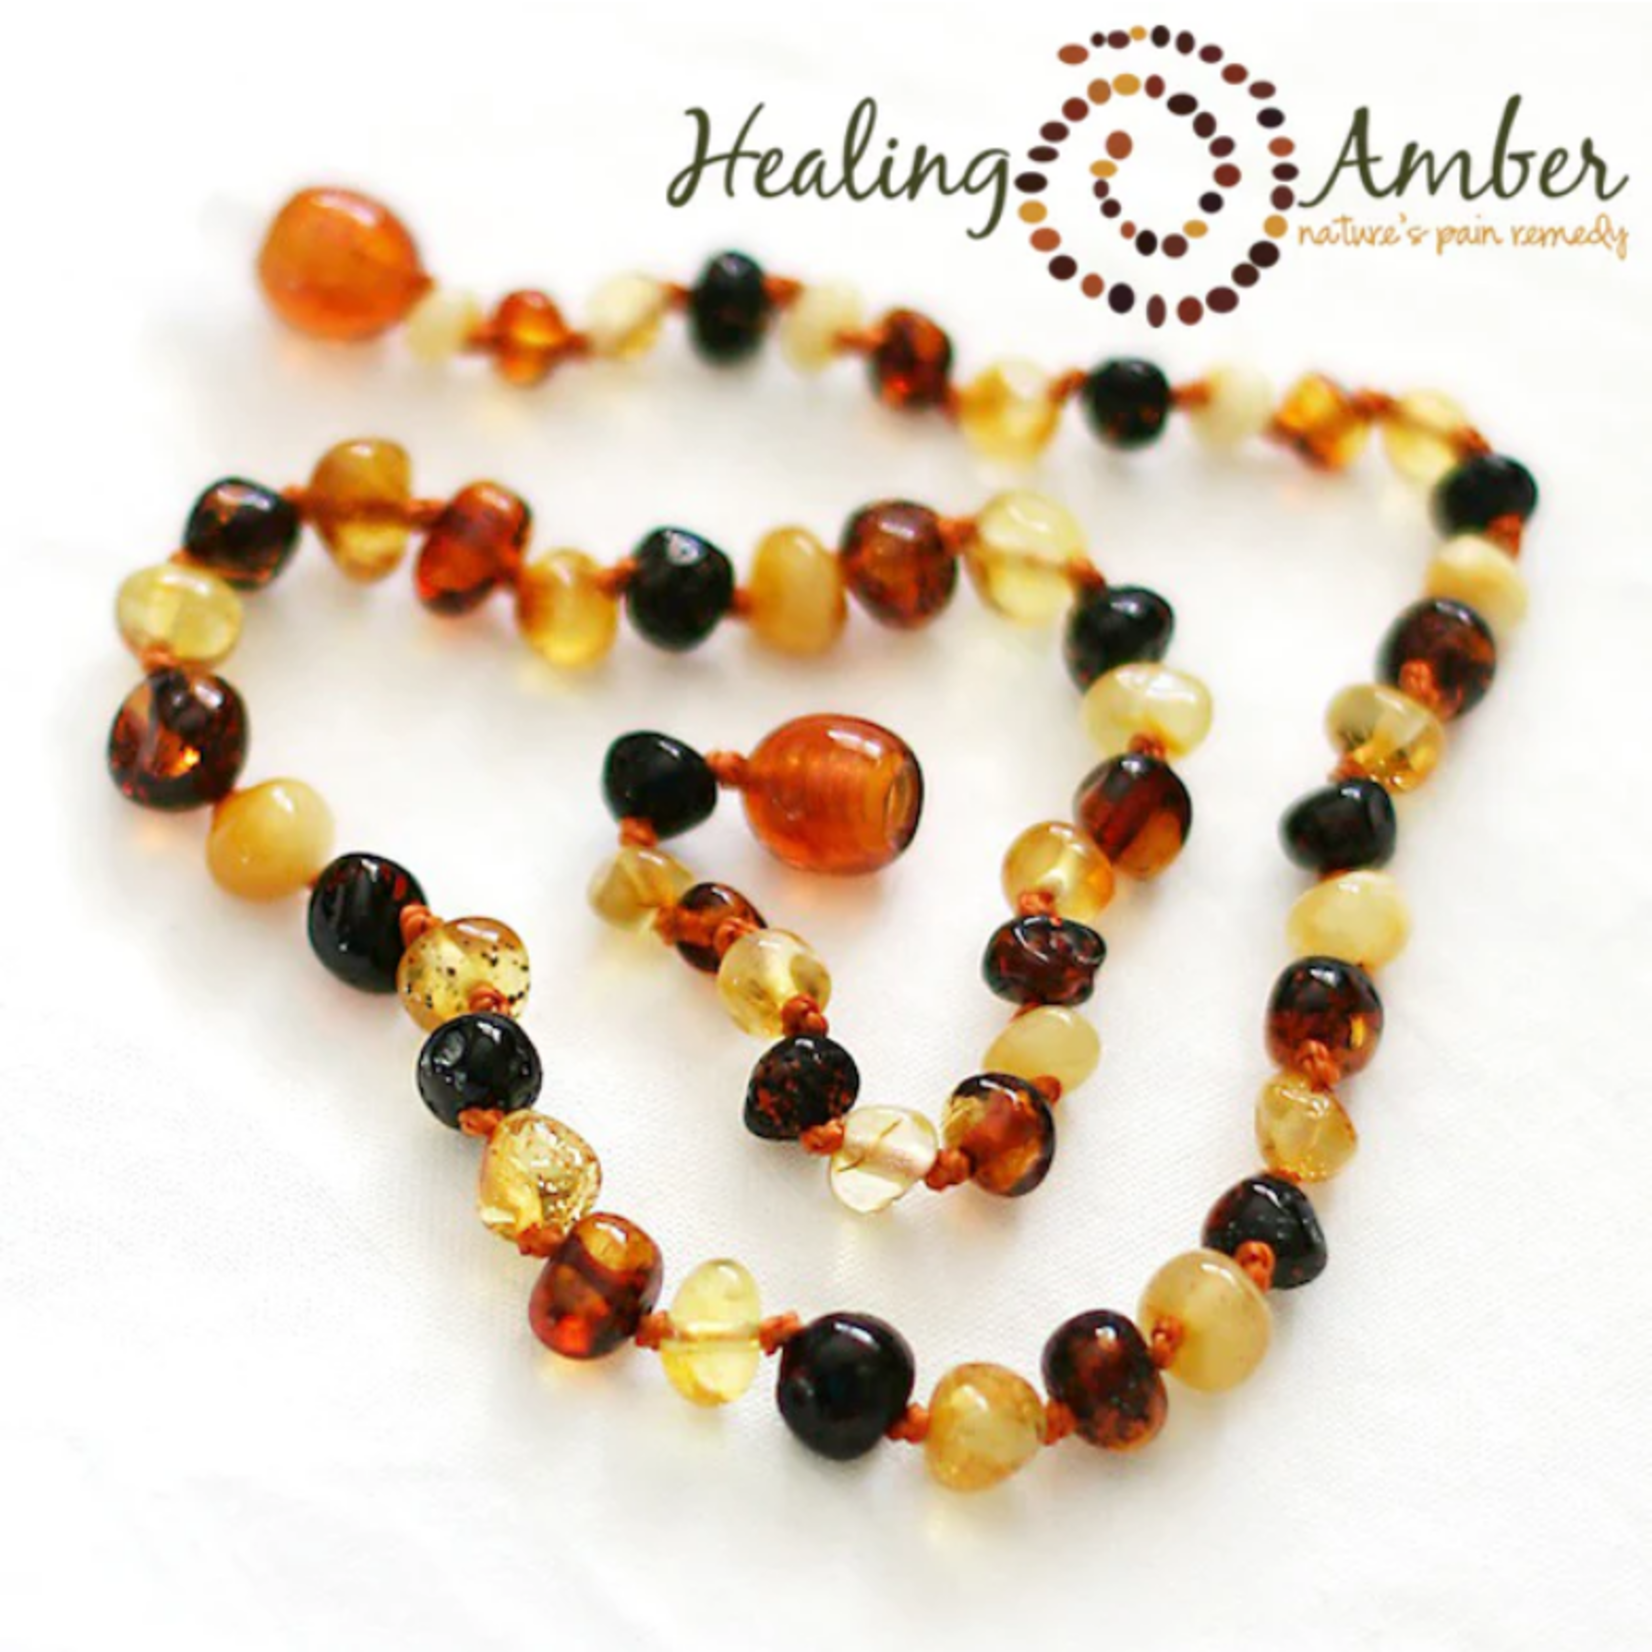 Healing Amber HEALING AMBER NECKLACES 15"